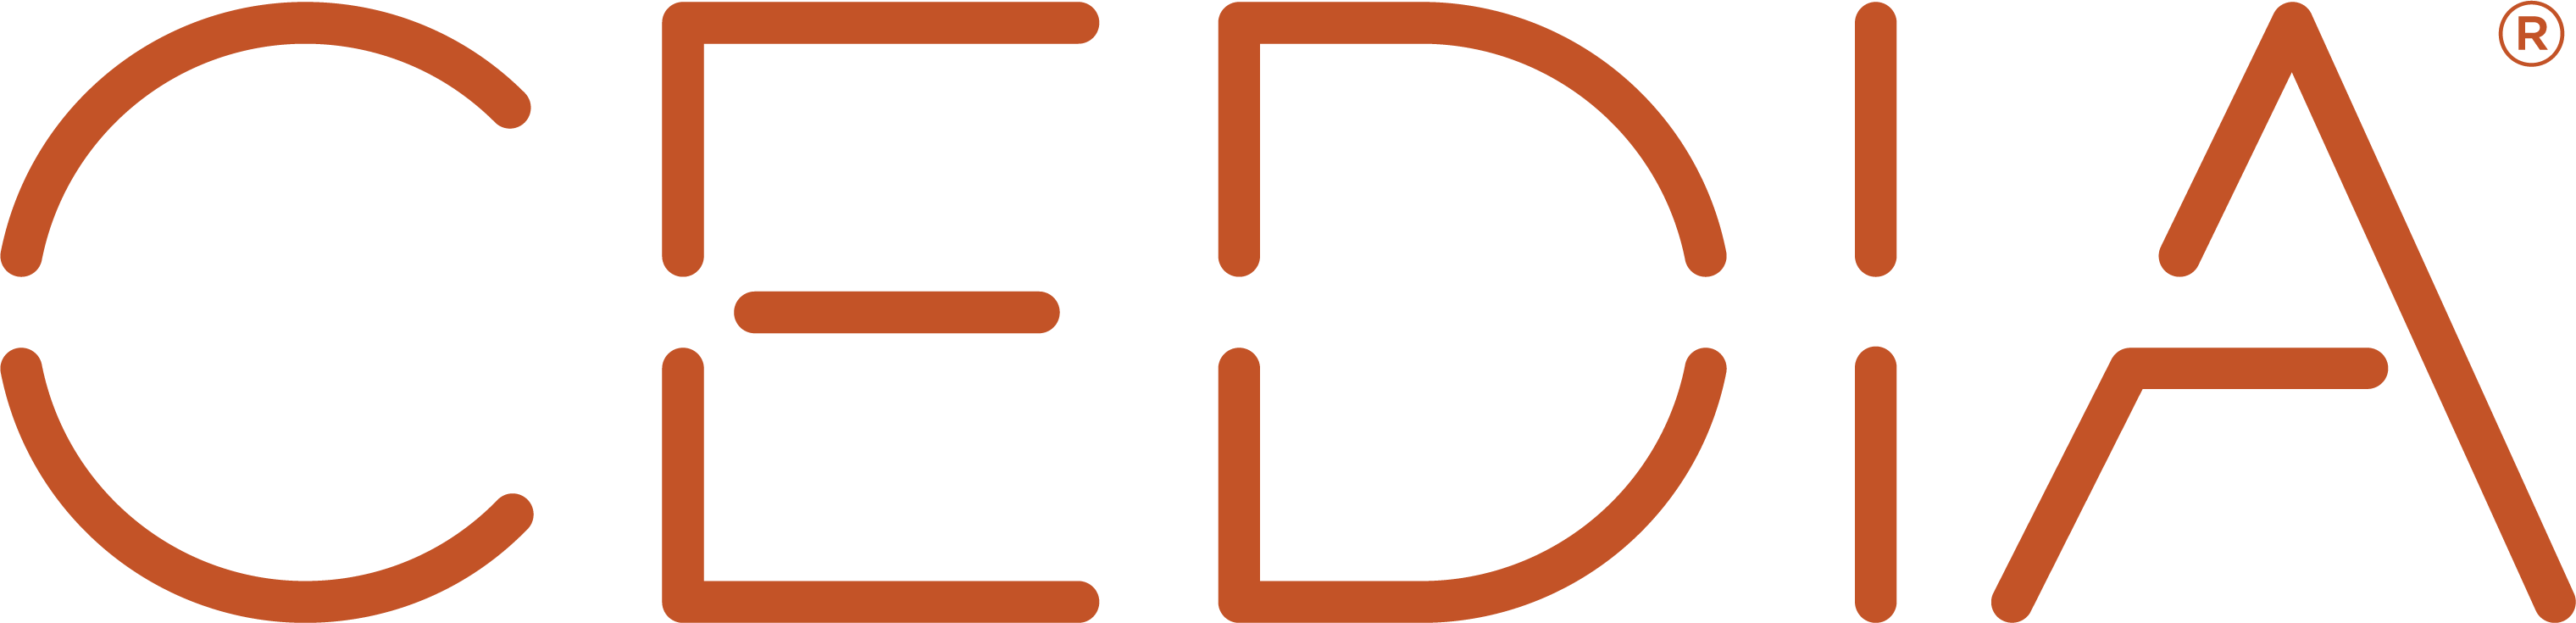 CEDIA-logo-copper